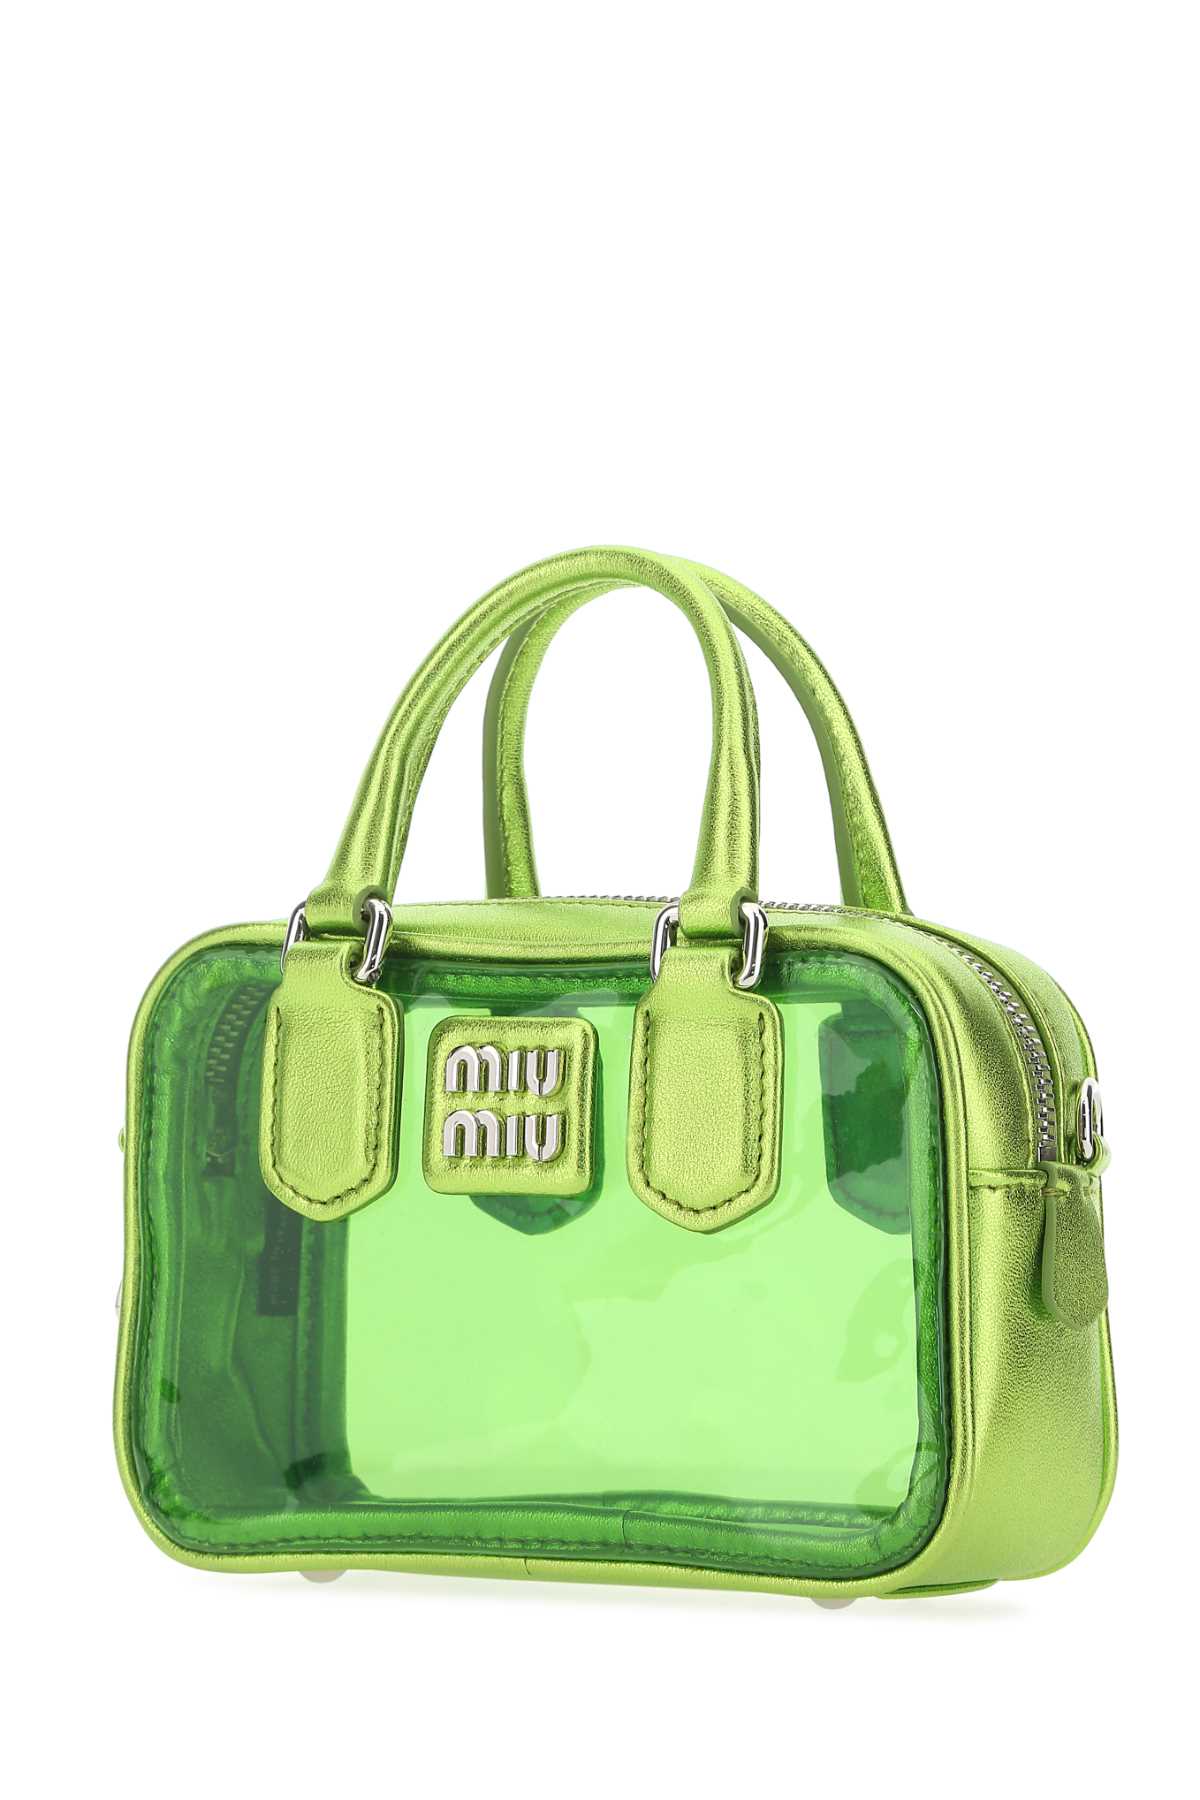 Shop Miu Miu Green Leather And Pvc Mini Handbag In F03bq